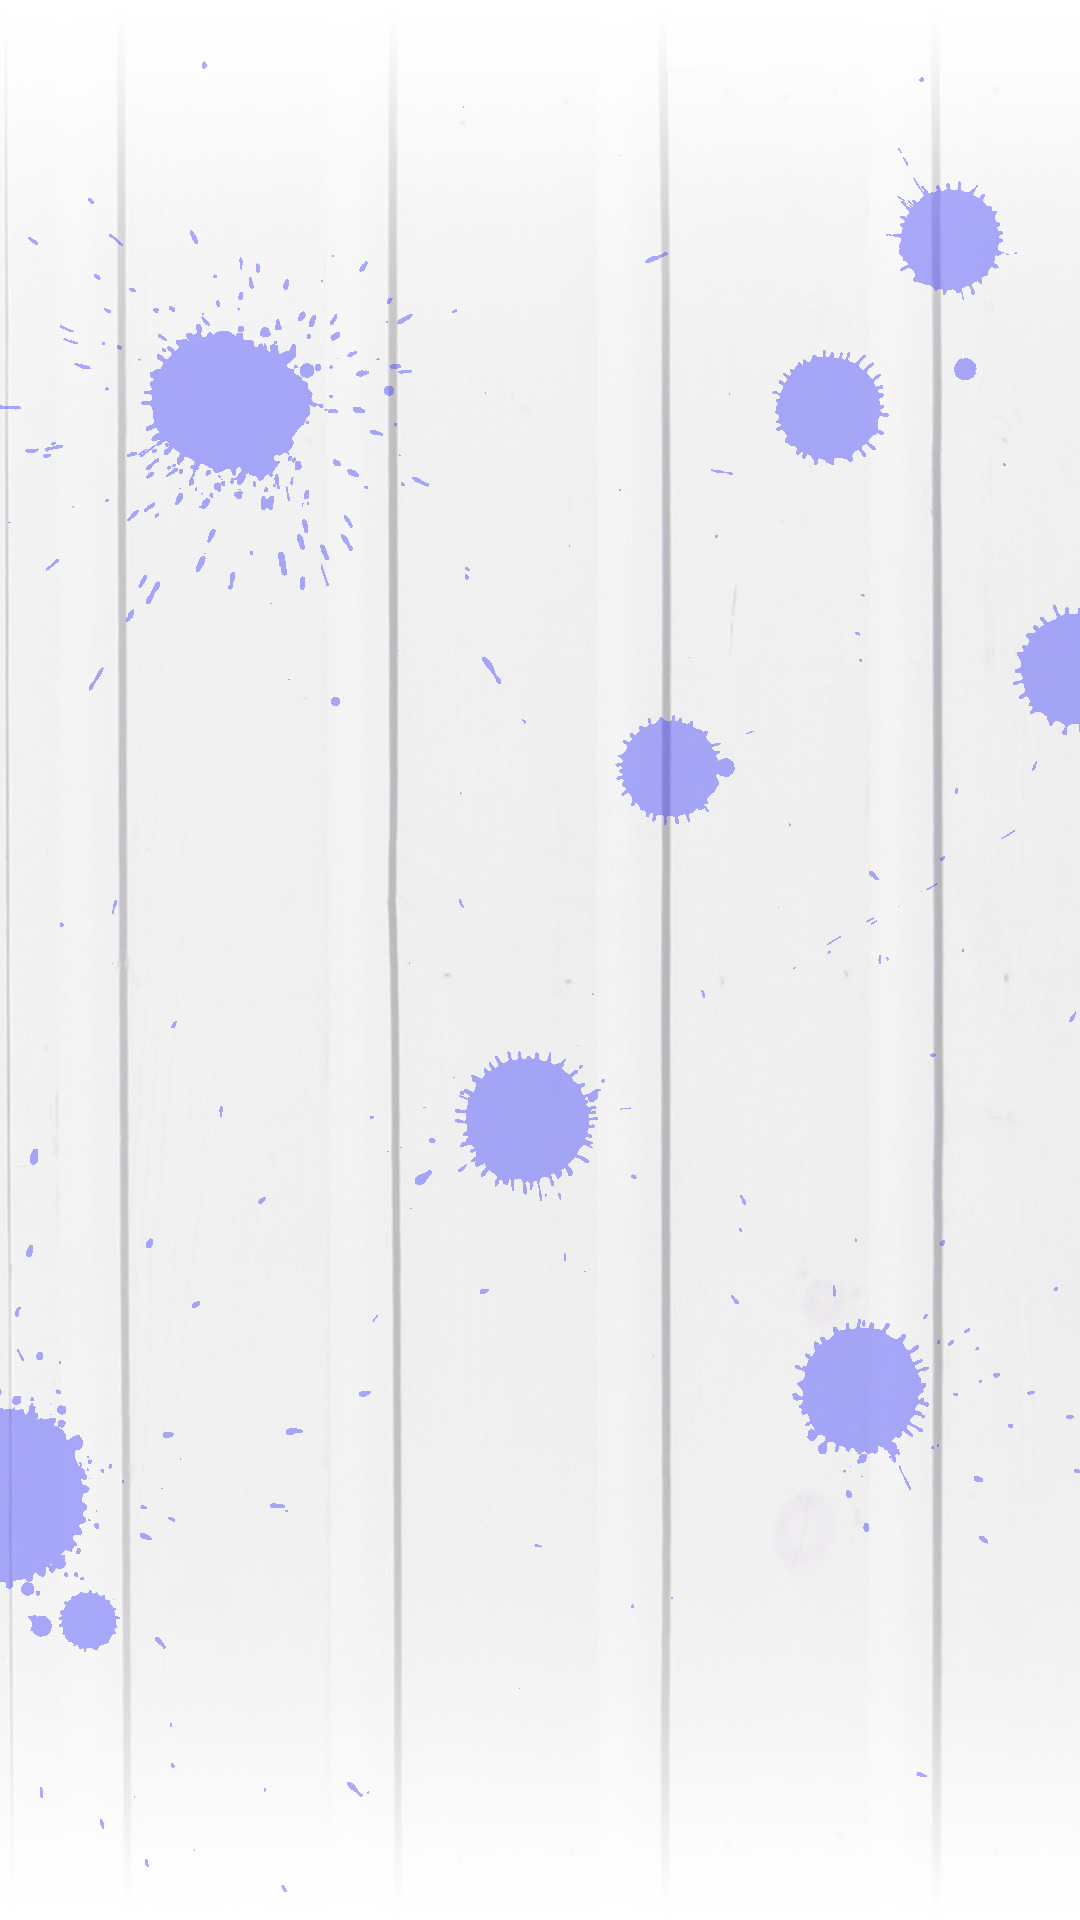 木目水滴白紫 Wallpaper Sc Iphone8plus壁紙